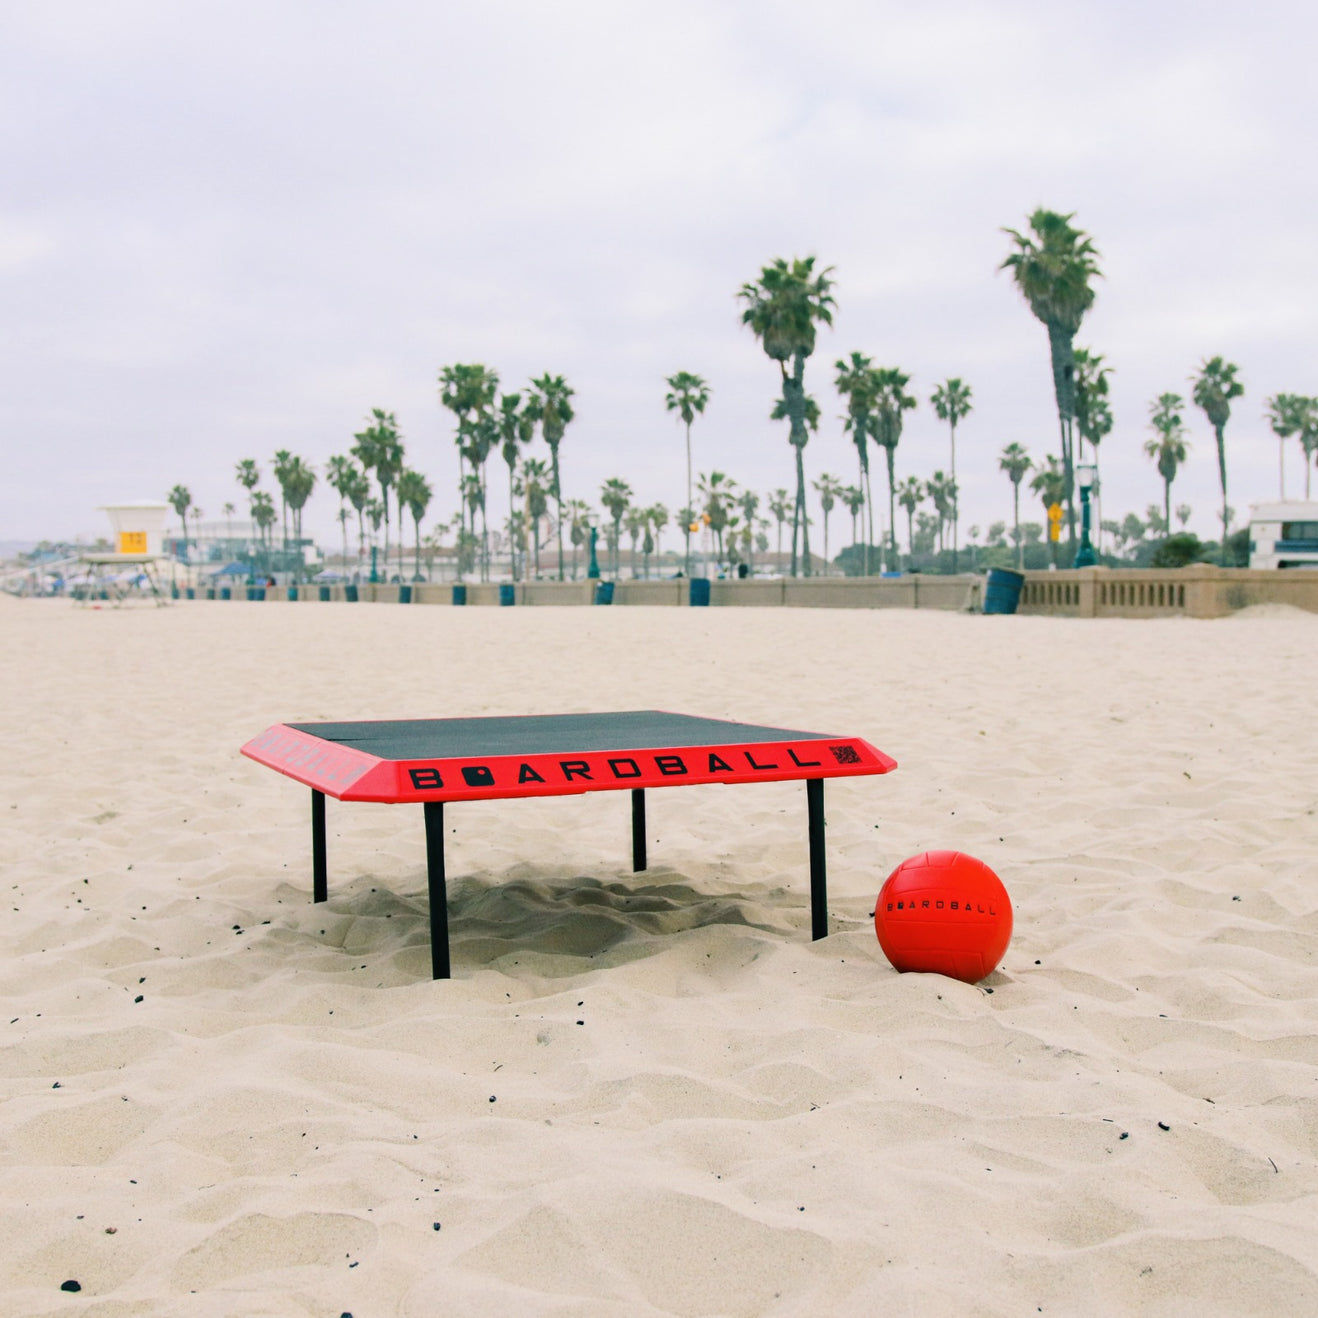 Boardball board with ball on the beach